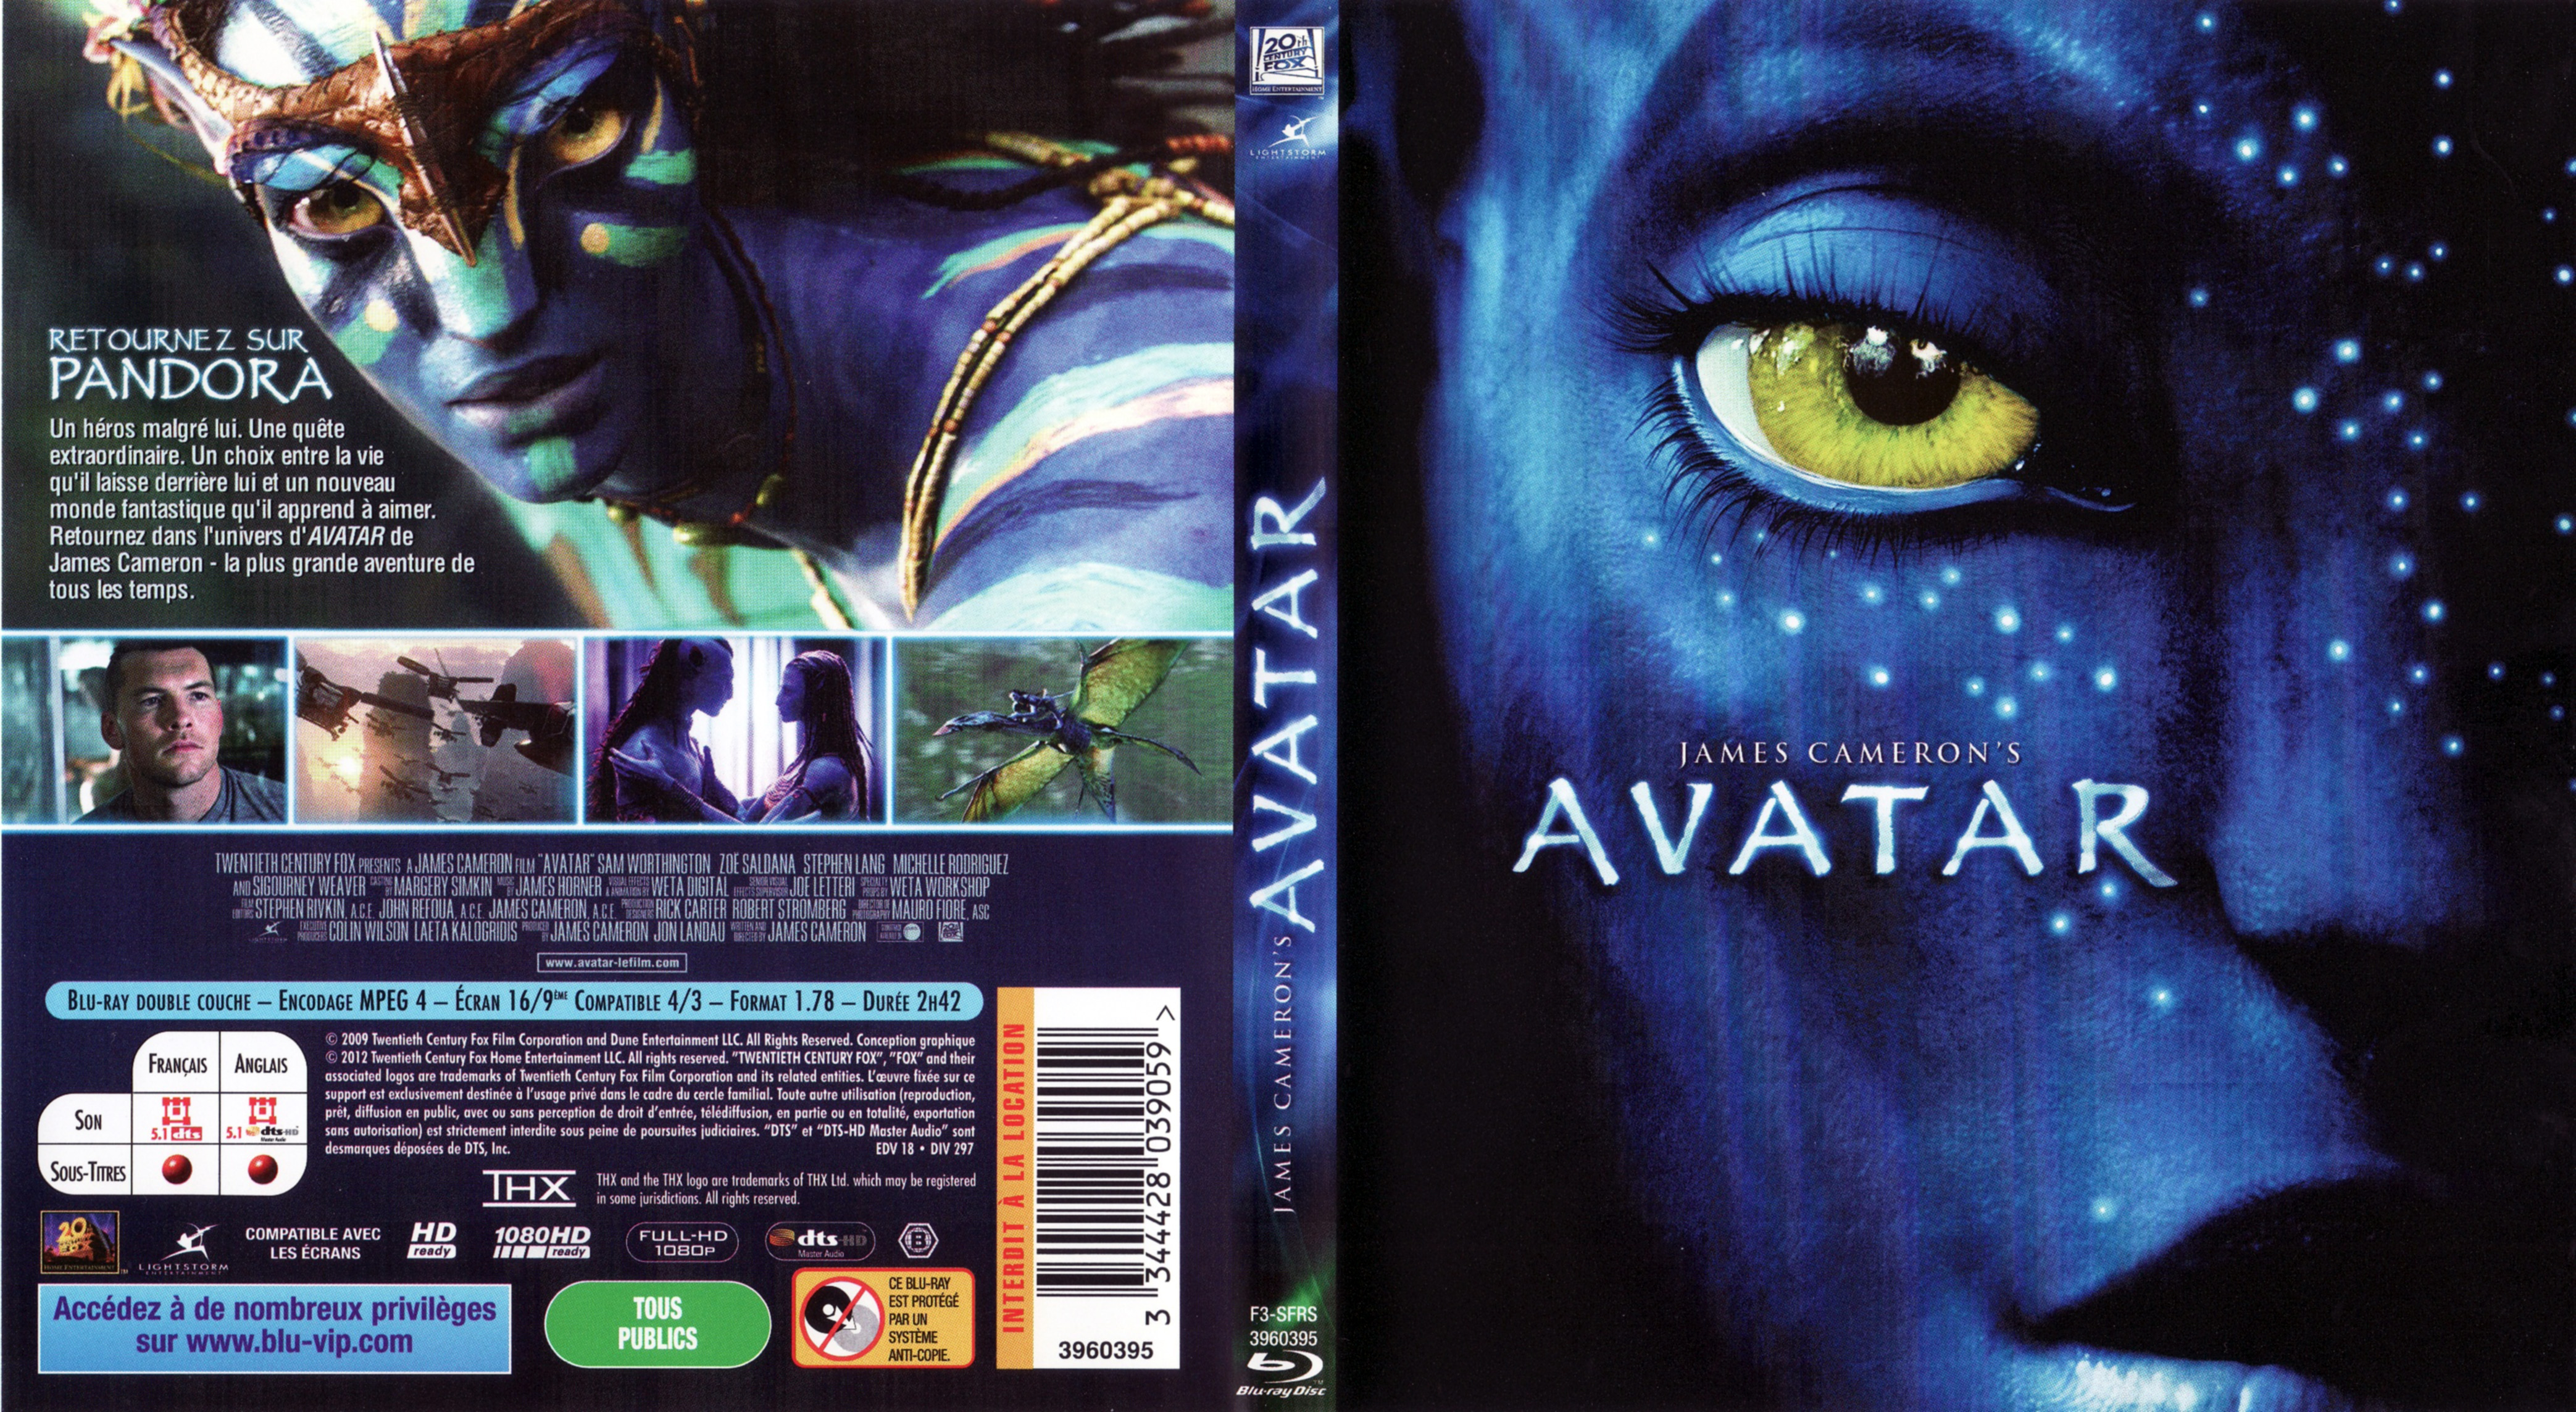 Jaquette DVD Avatar (BLU-RAY) v3